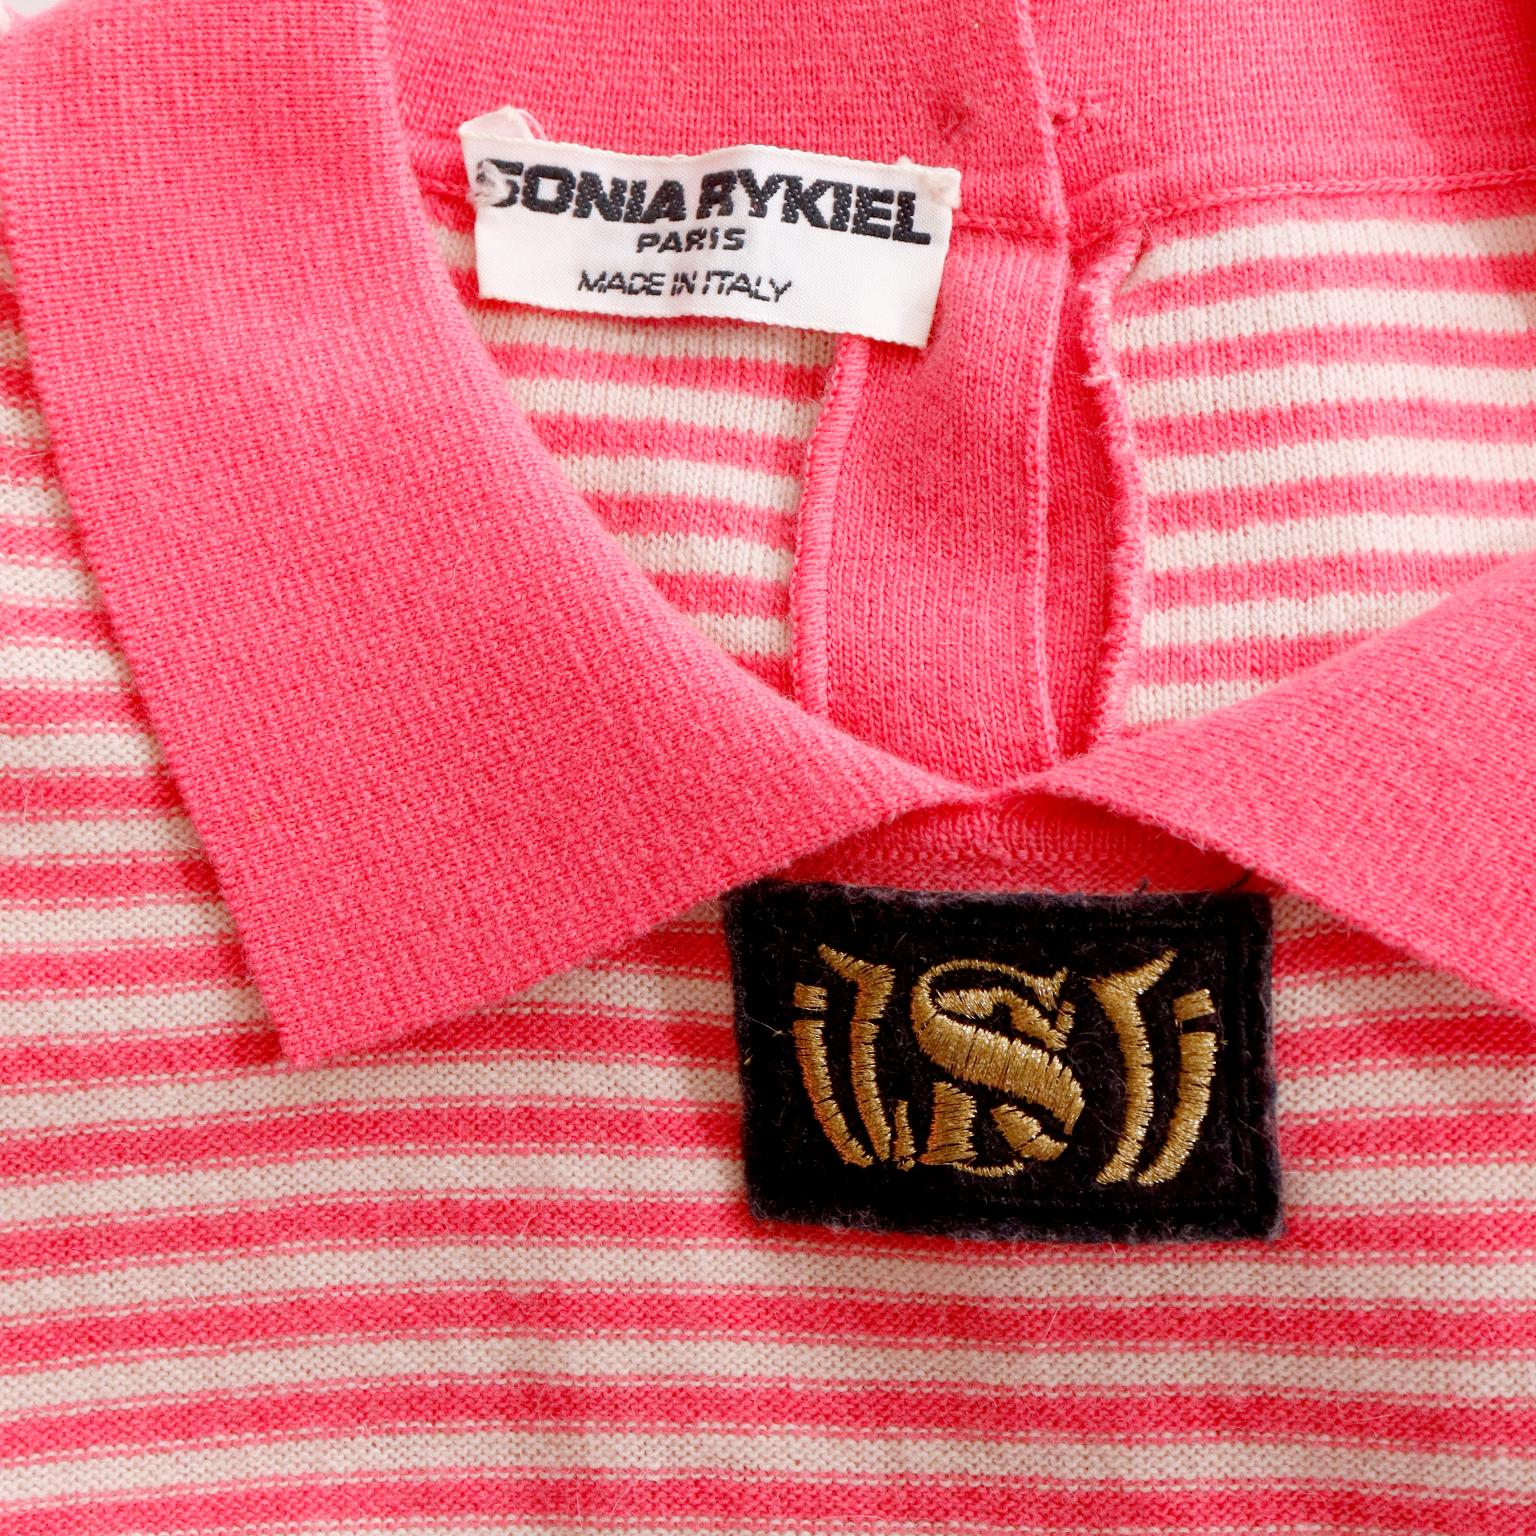 Sonia Rykiel Vintage Pink Striped 1980s Knit Sweater Top w Logo Emblem For Sale 1